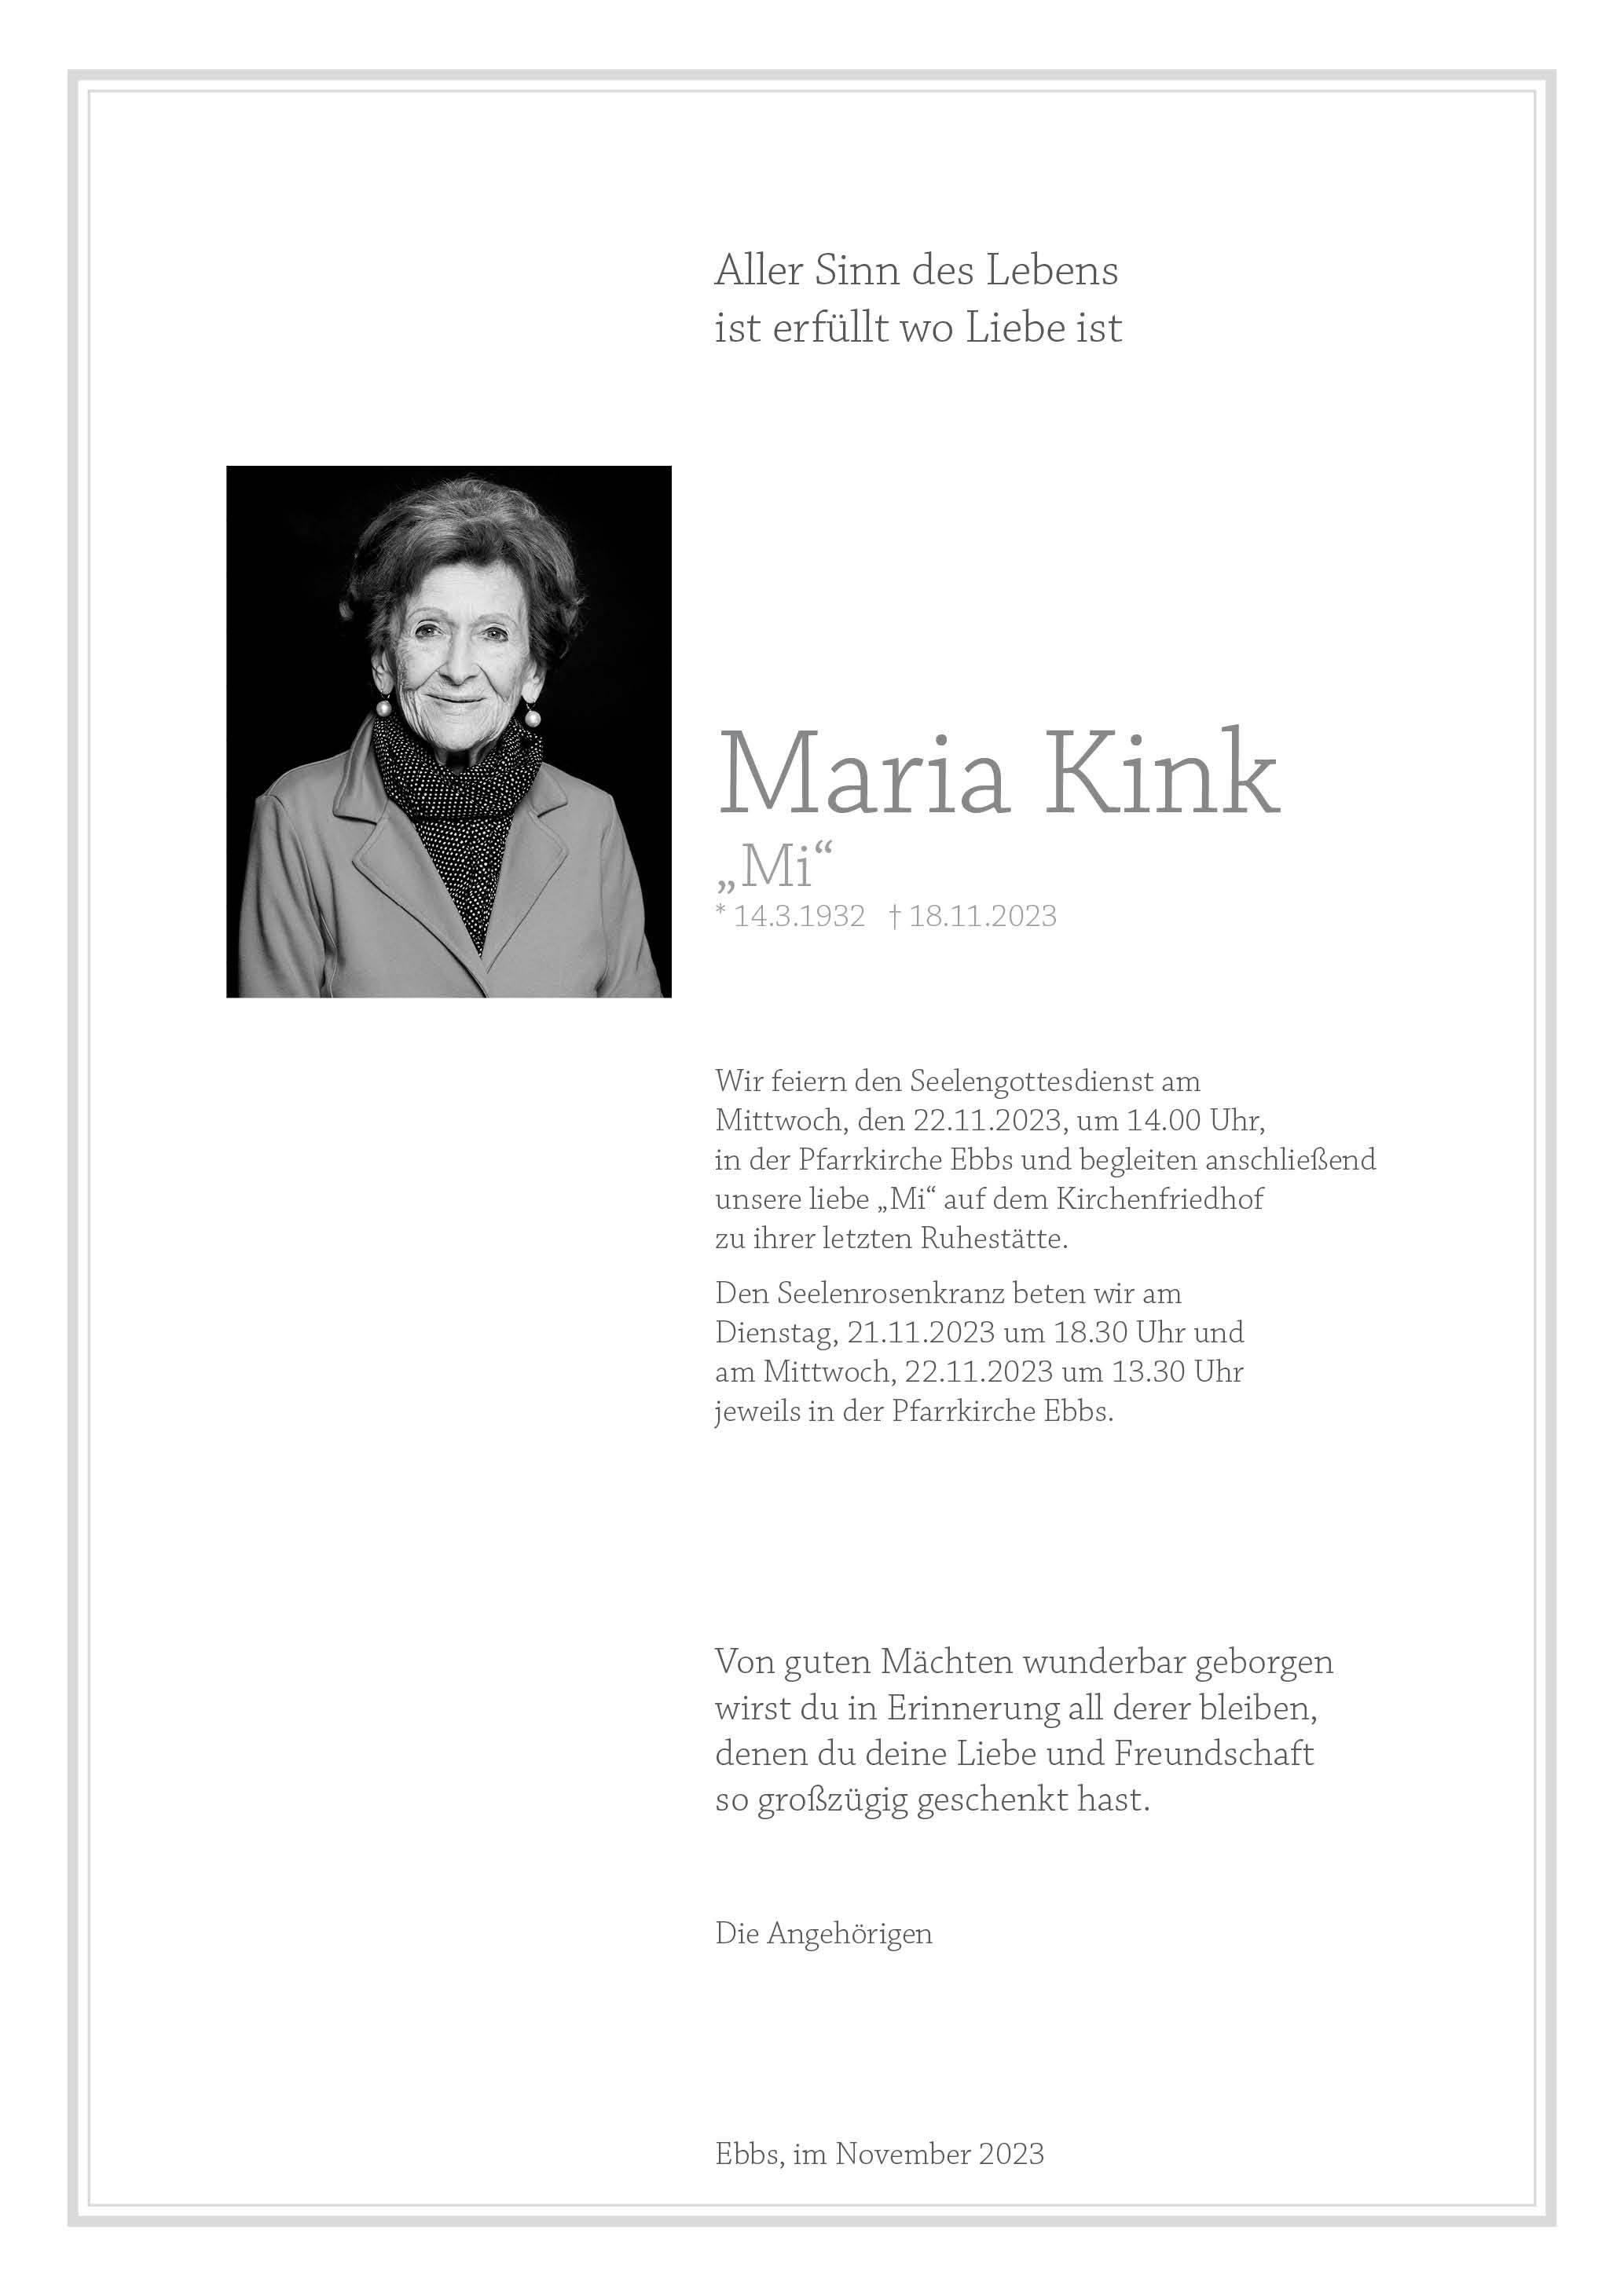 Maria "Mi" Kink